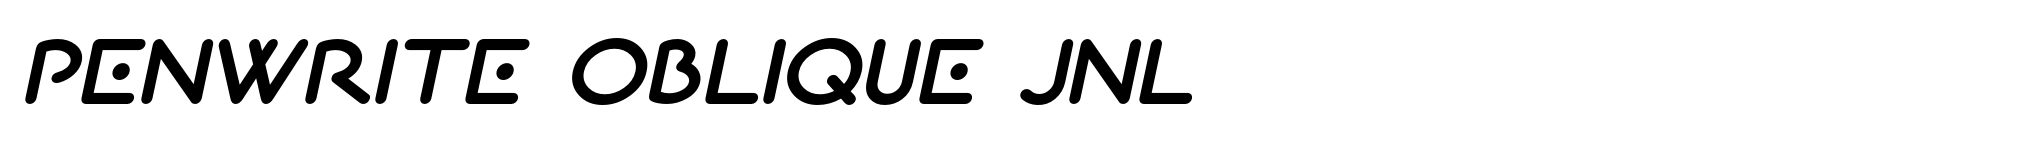 Penwrite Oblique JNL image